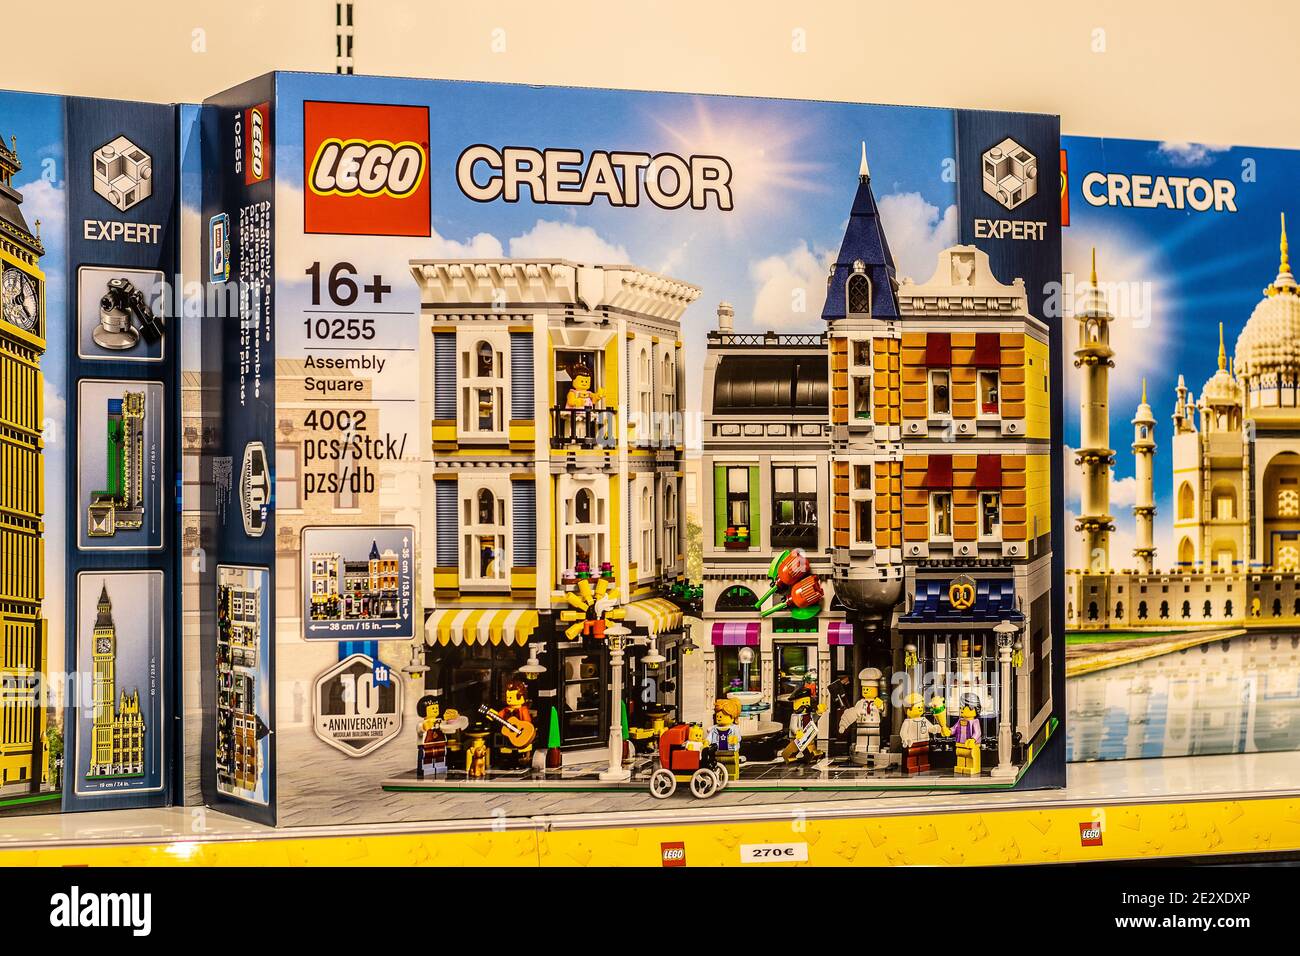 Coffret LEGO sur le magasin à vendre, Lego Star Wars, Speed, Super Heroes, City, Juniors, Classic, Duplo, Creator, Technic, Friends, Ninjago, Elves, Banque D'Images